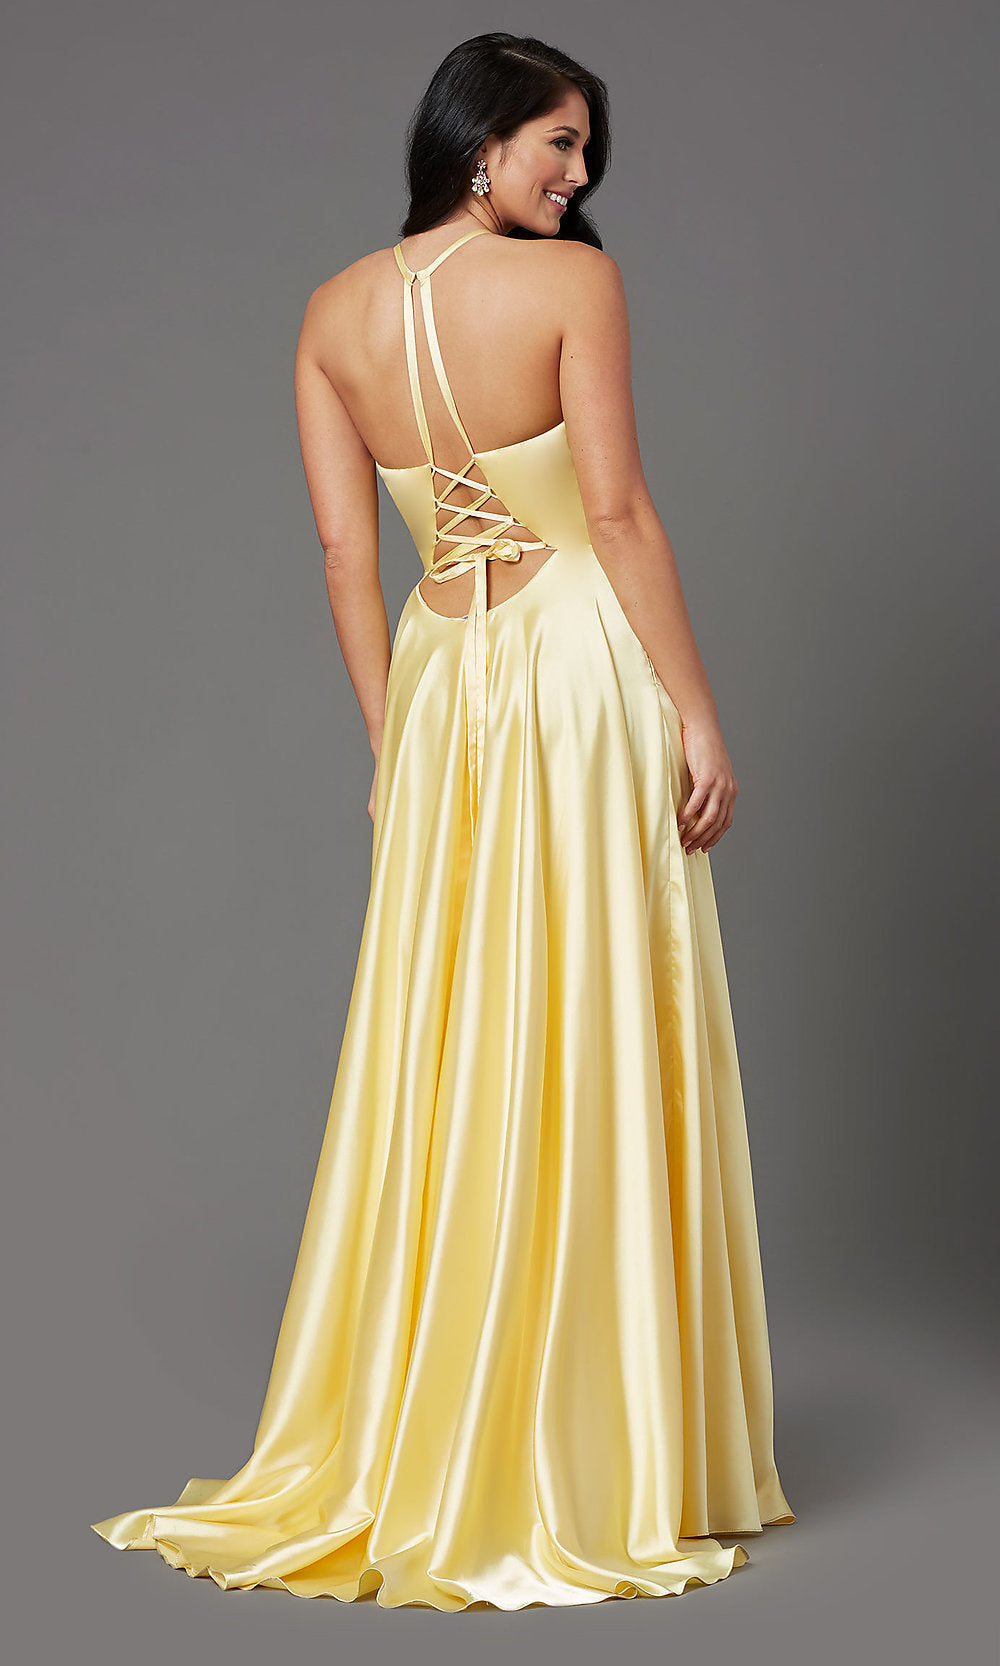  Long Faux-Wrap High-Neck Corset Formal Prom Dress